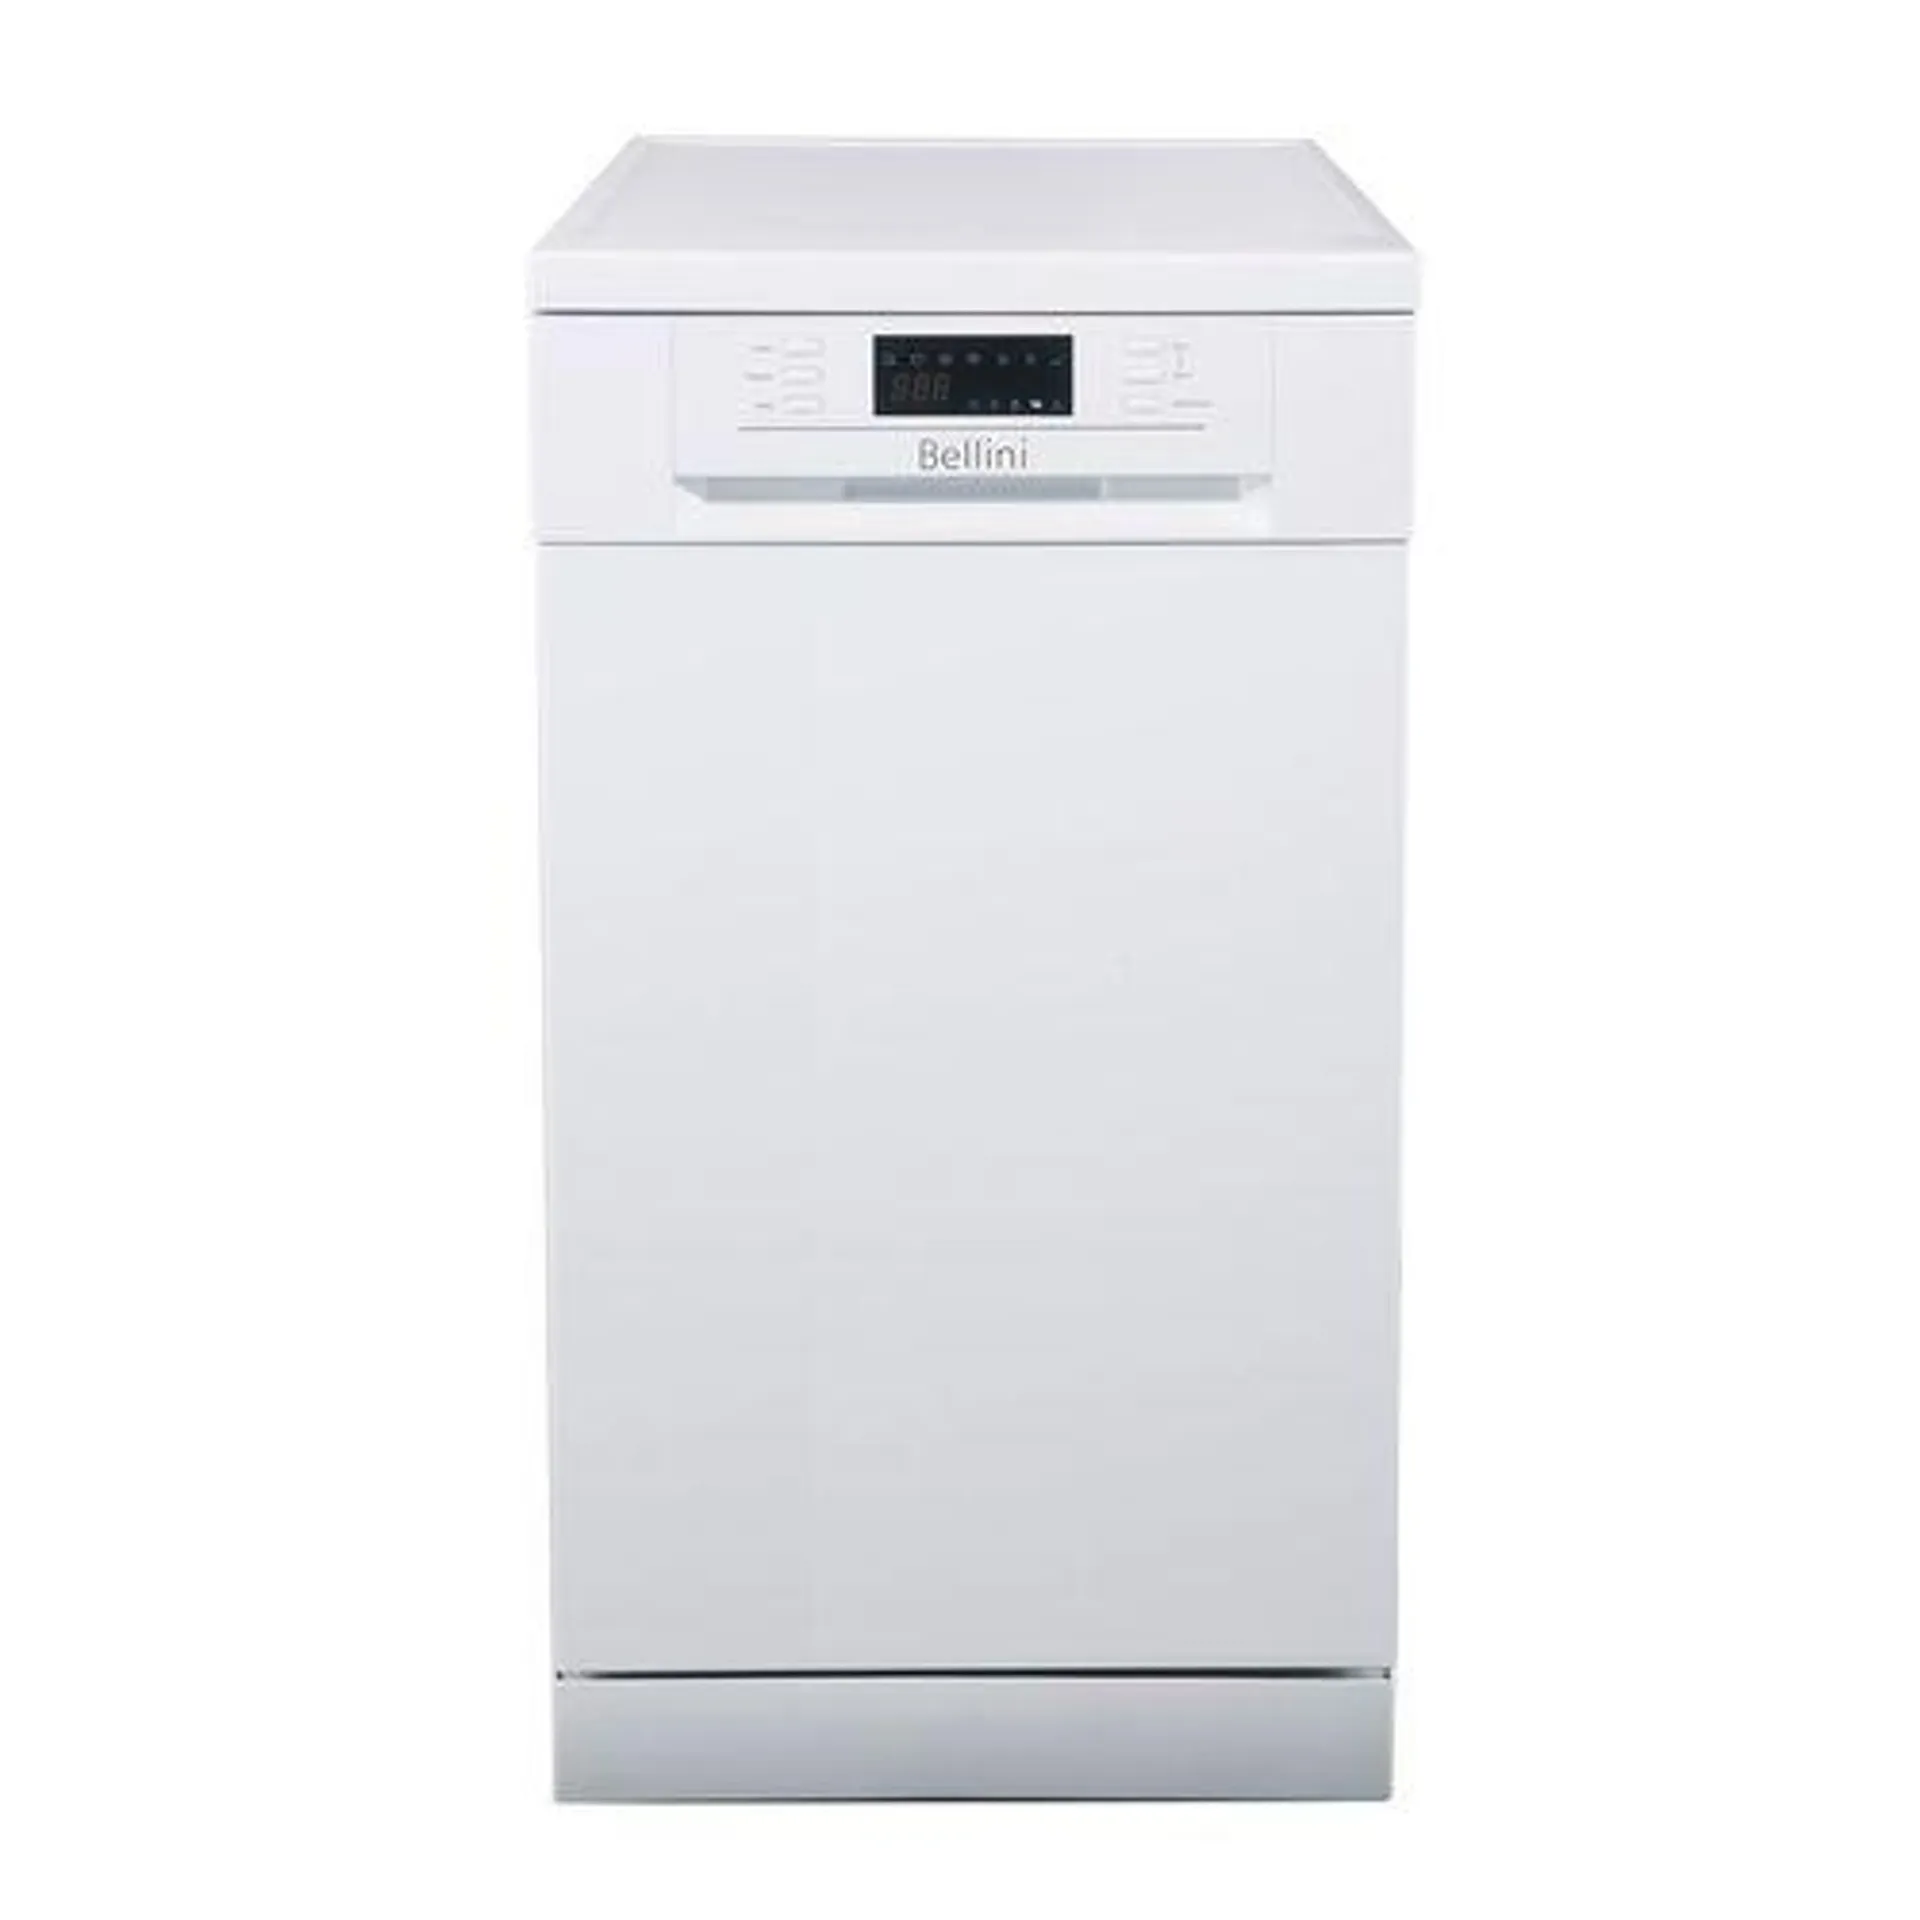 Bellini WELS 4 Star 9.4L/w 45cm White 9 Place Setting 6 Programs Dishwasher